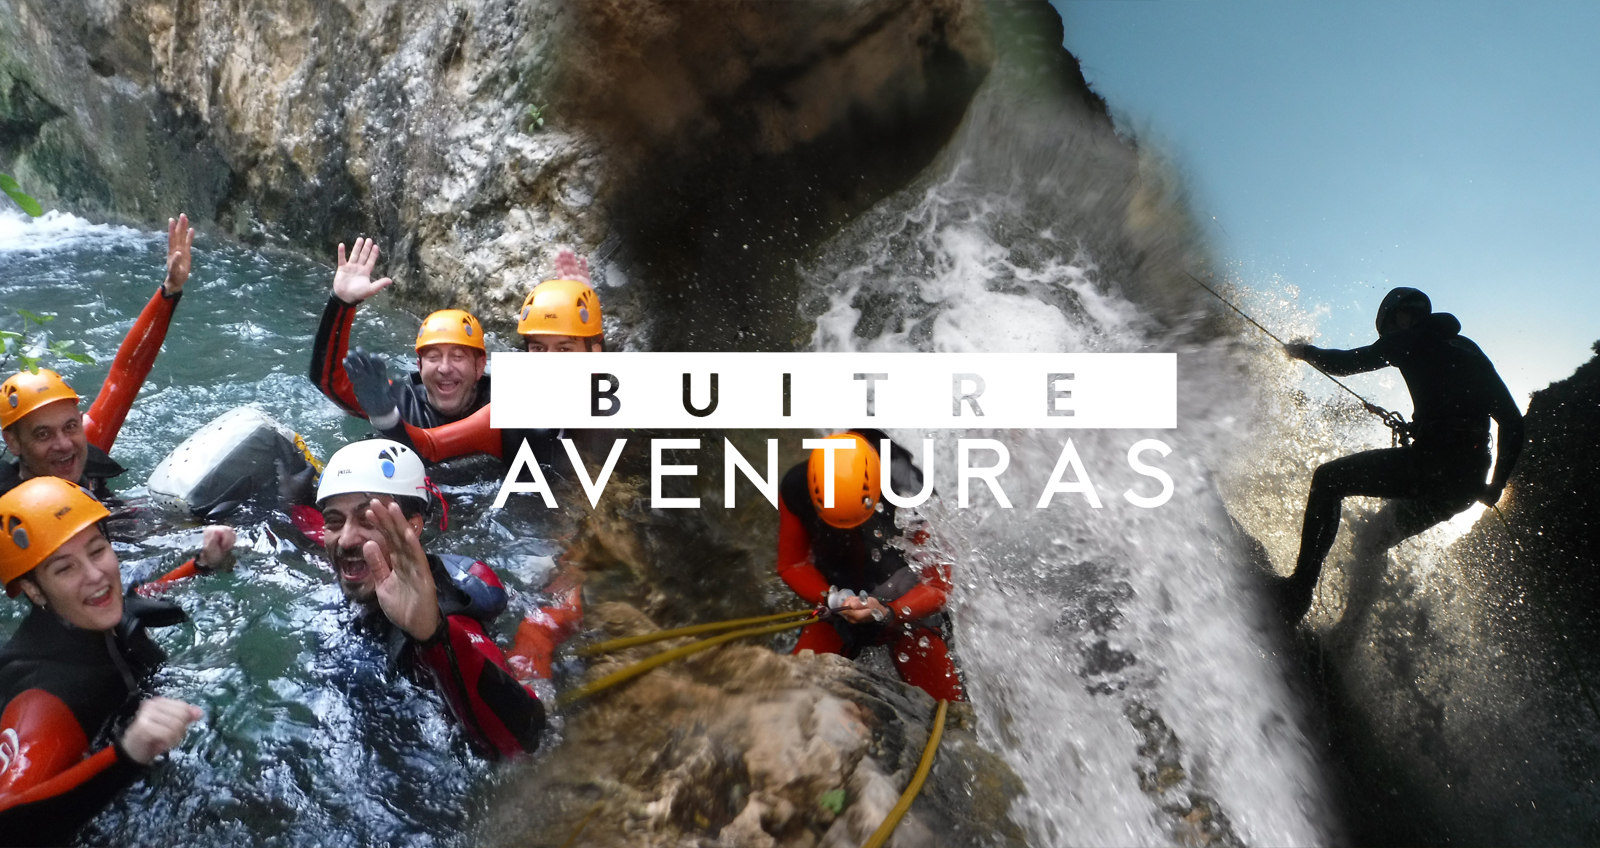 BUITRE AVENTURAS | Barranquismo | Descenso río Segura | Rafting en Murcia | Floración Cieza